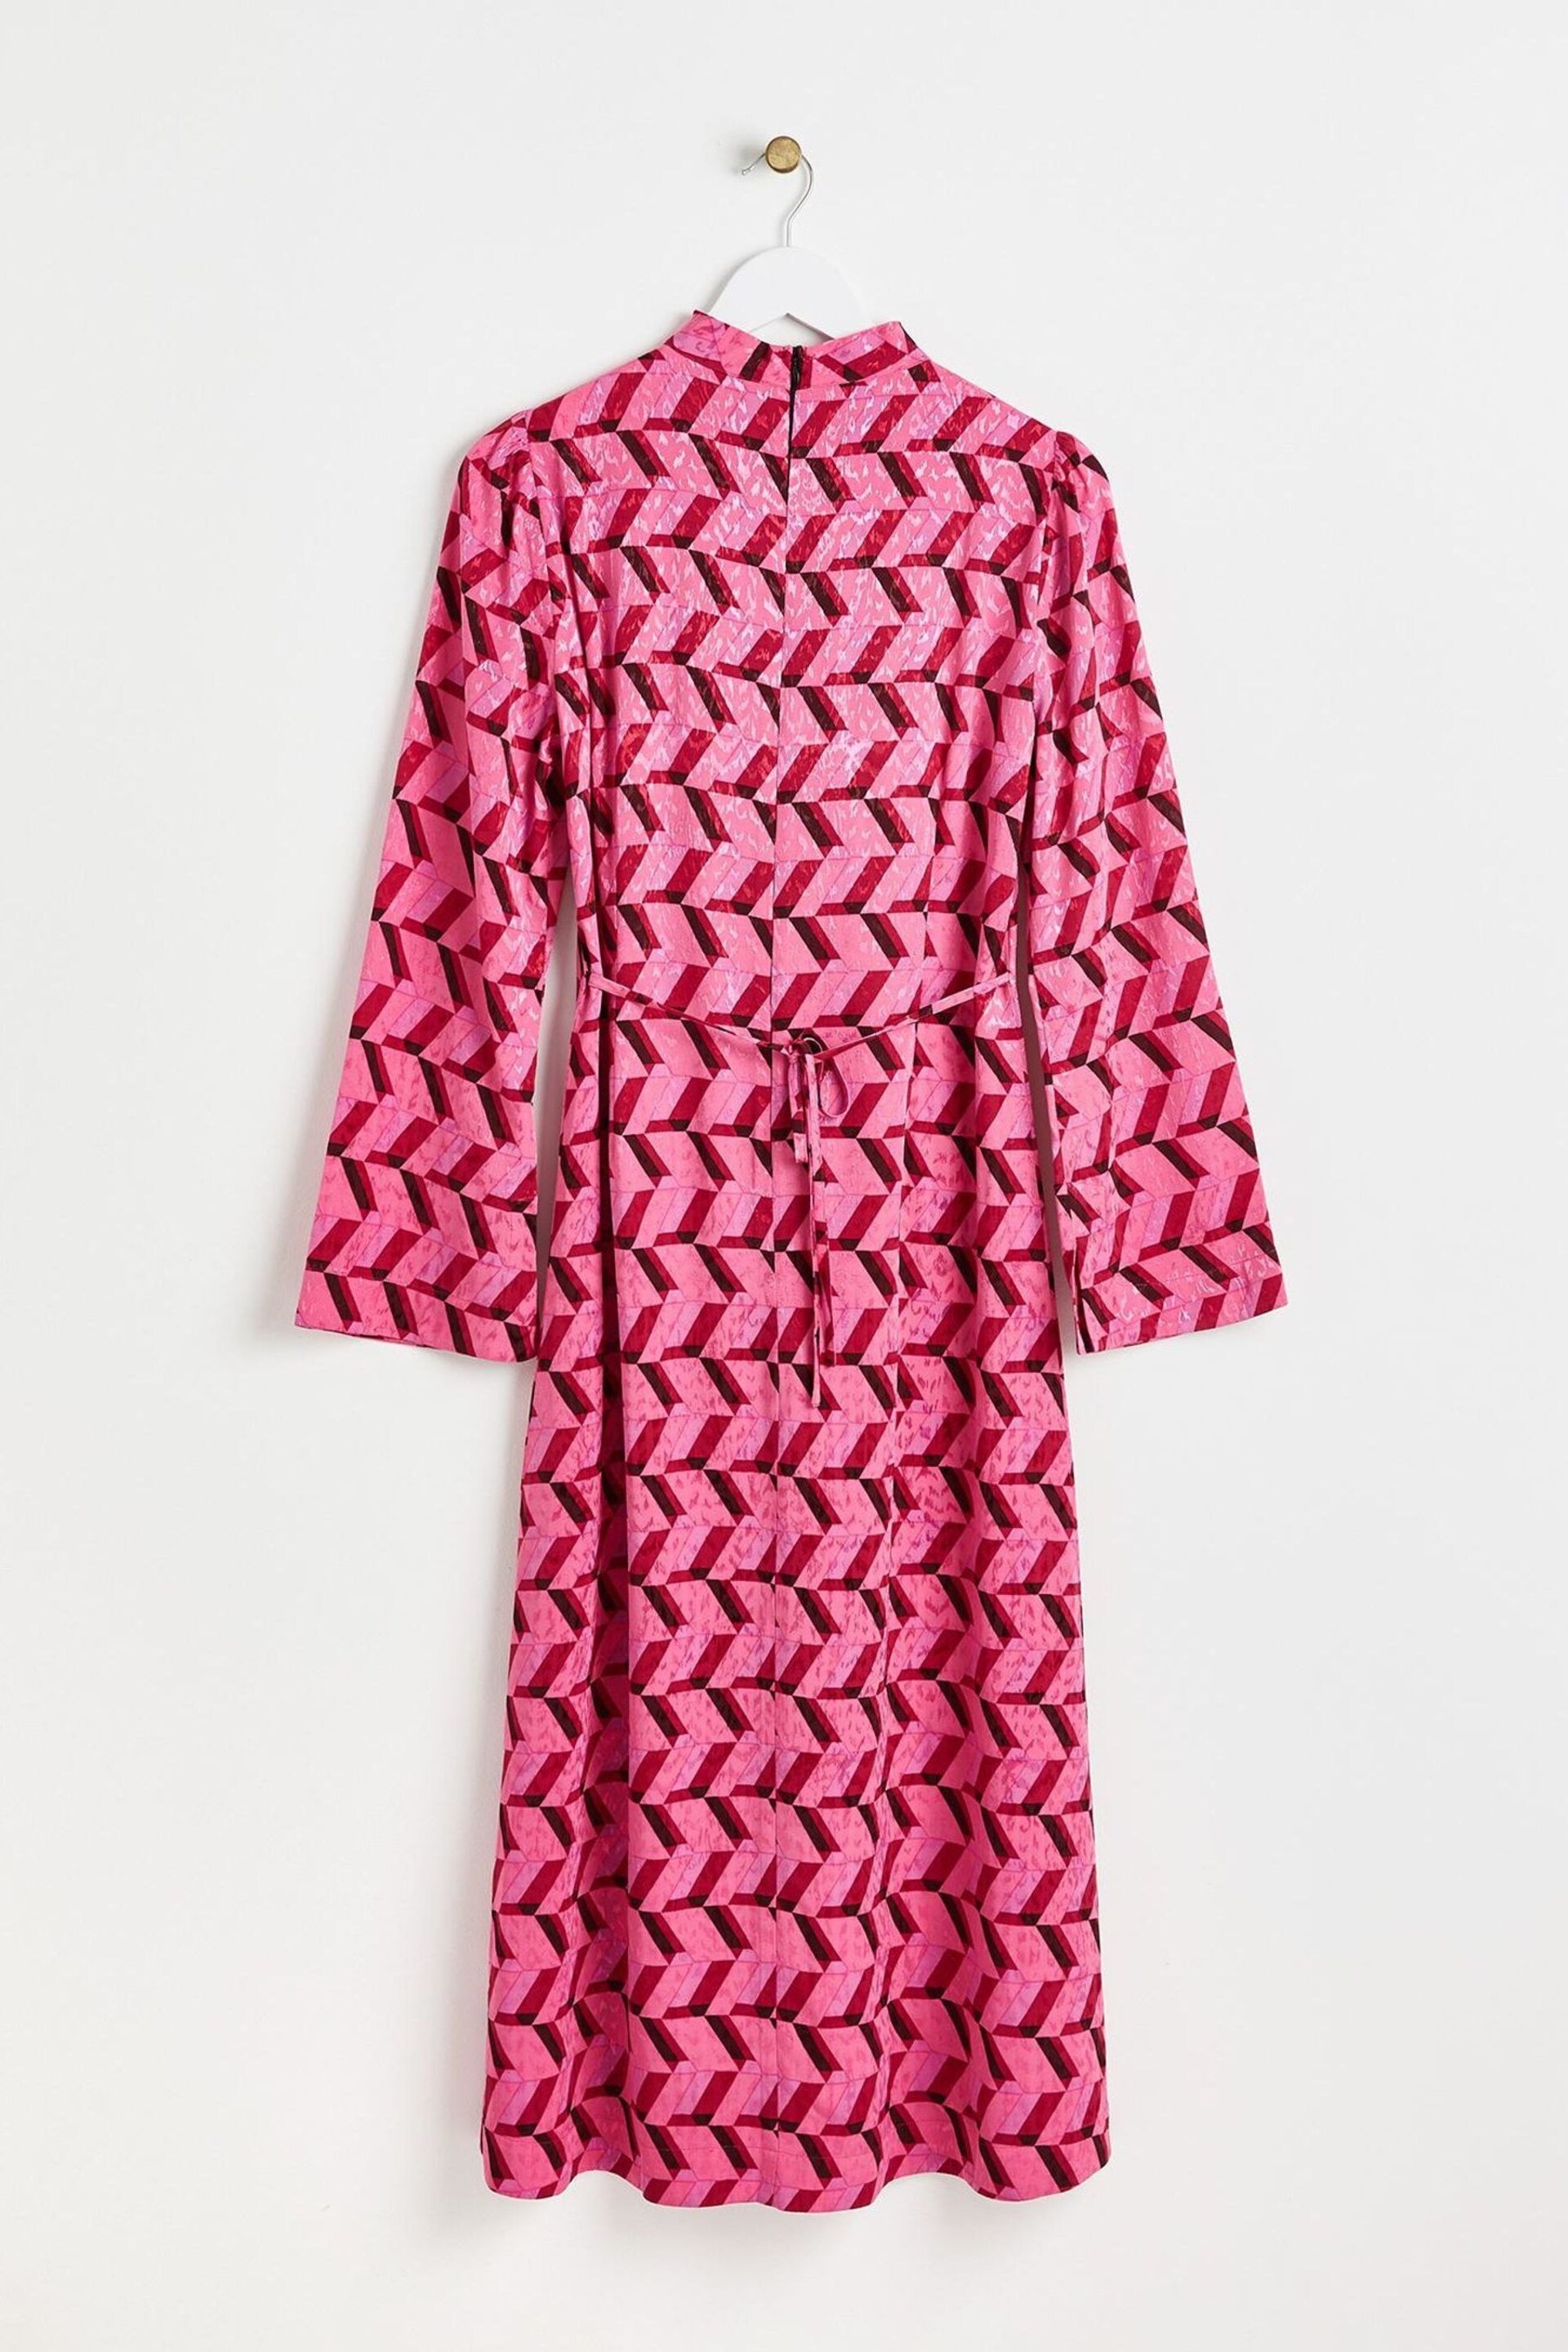 Oliver Bonas Pink Geometric Knot Front Midi Dress - Image 5 of 8